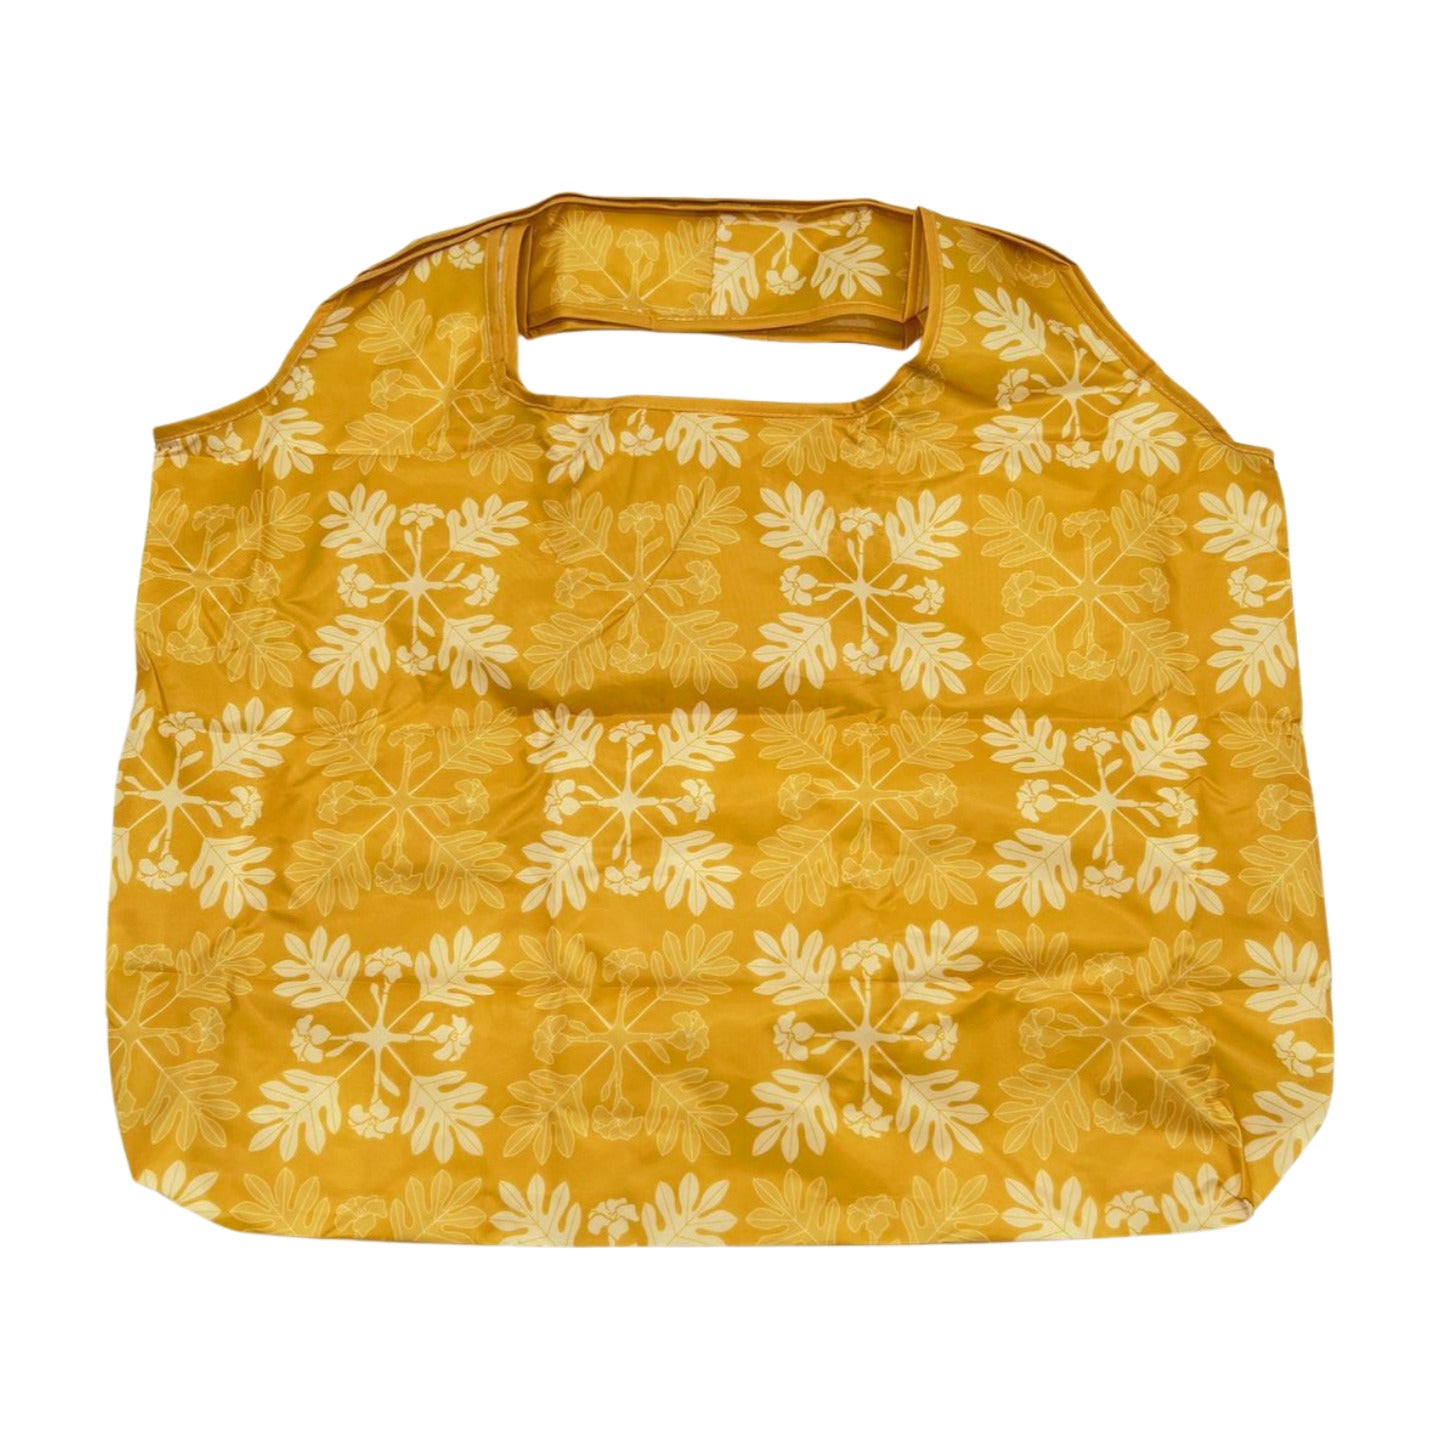 Pop-Up Mākeke - Lei'ohu Designs - Reusable Grocery Bag - Puakenikeni Quilt - Front View